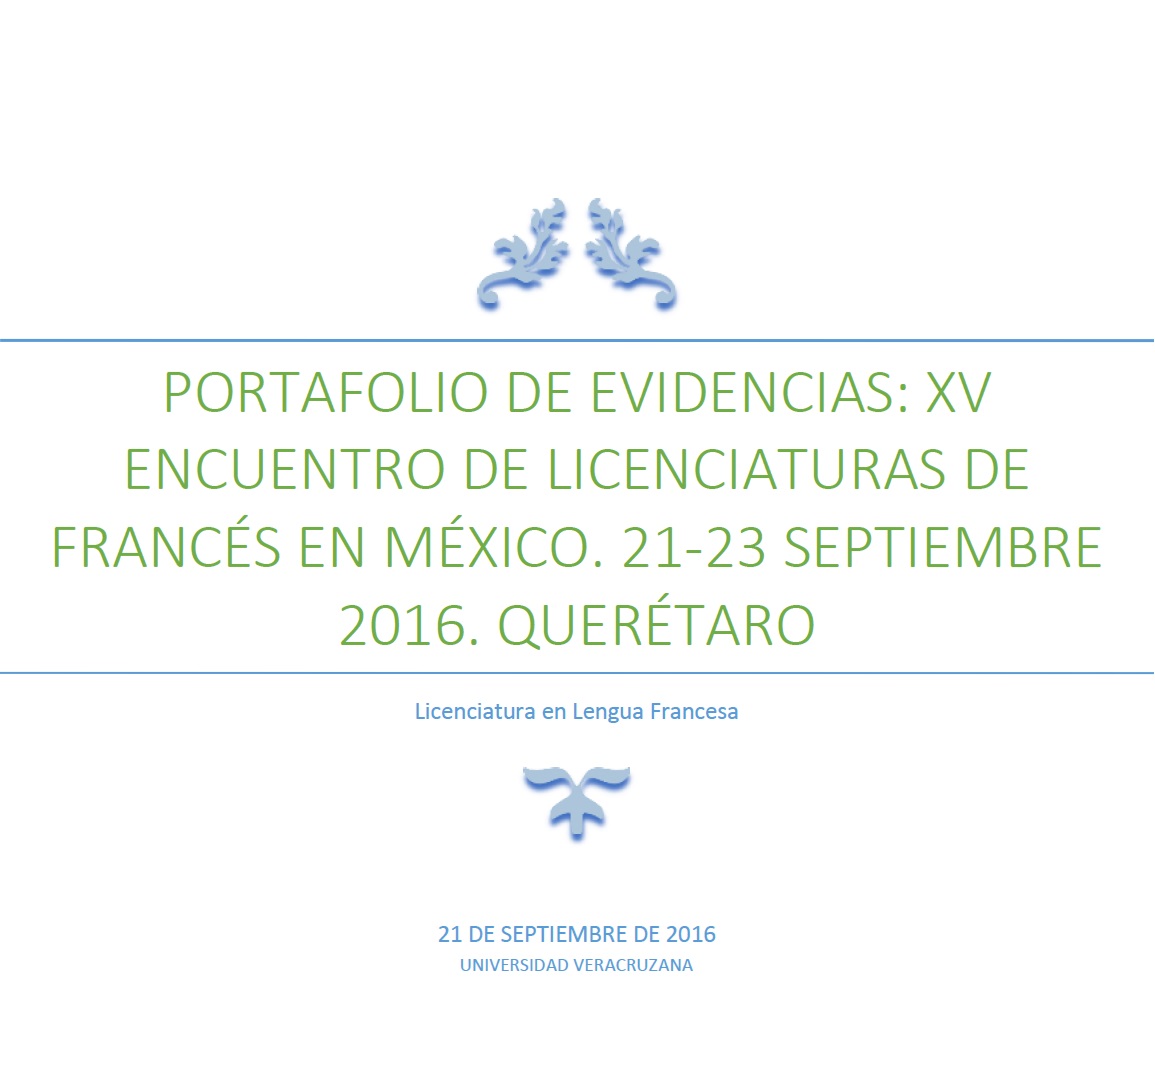 ► Portafolio de evidencias: XV encuentro de licenciaturas de francés en México 21-23 septiembre 2016 Querétaro